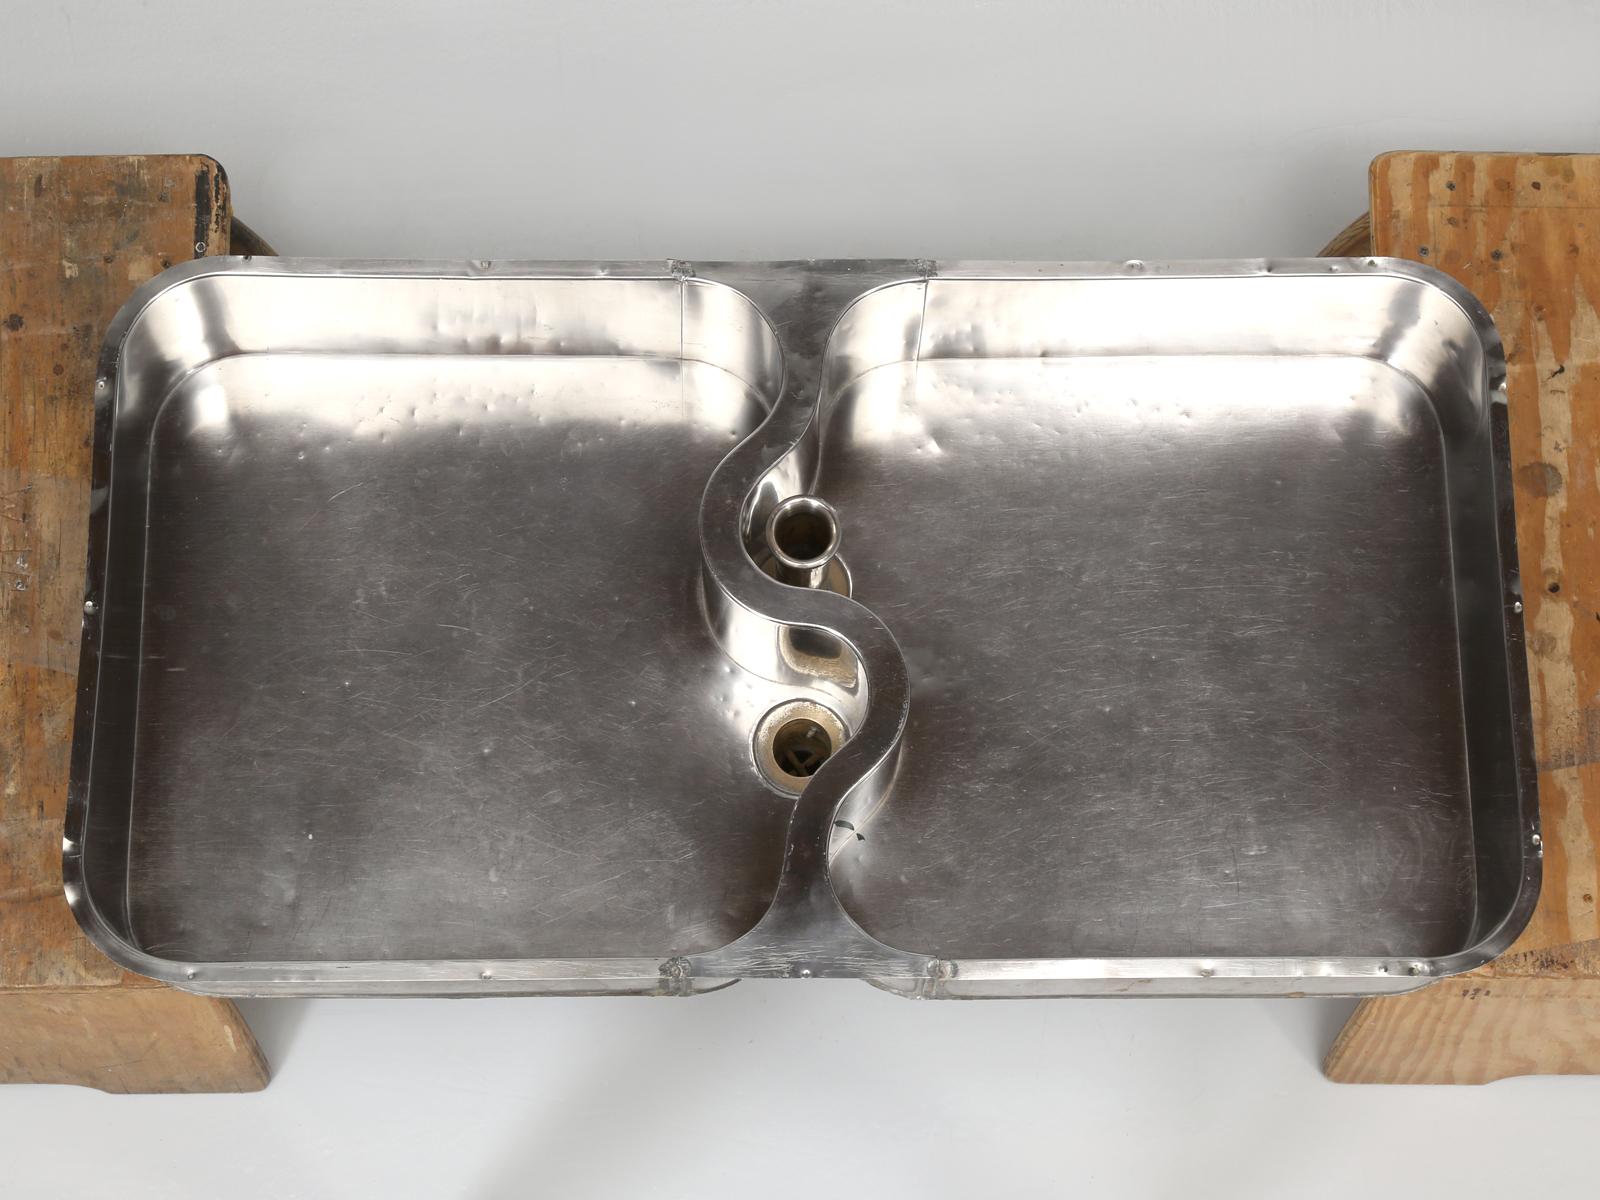 North American Antique German Silver Undermount Sink